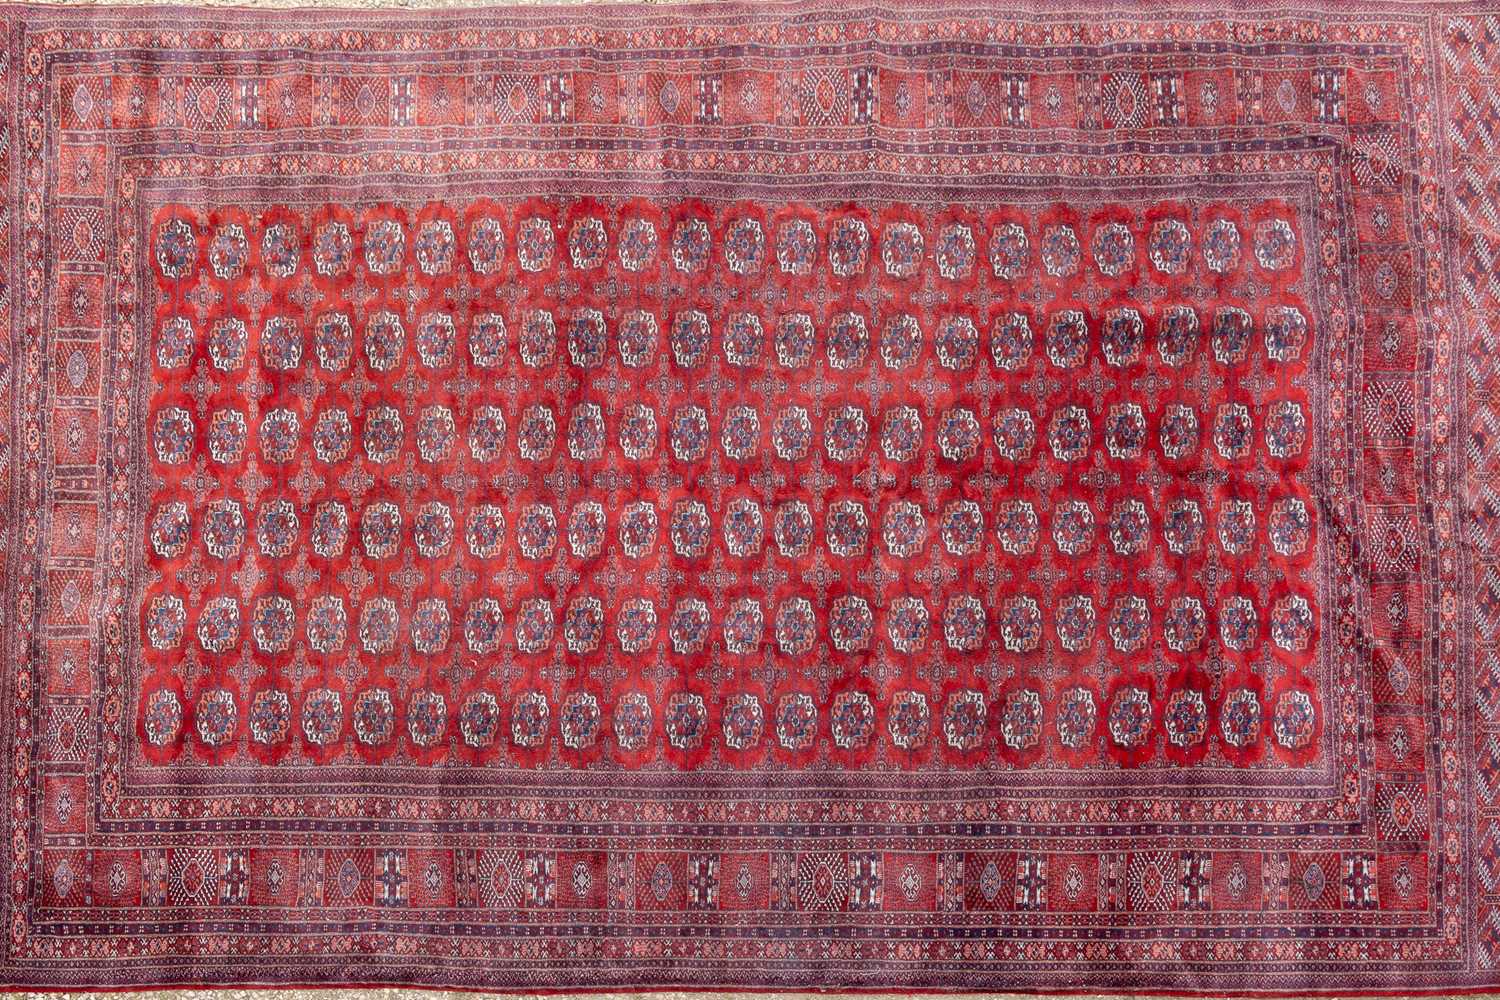 A Baluchi style red ground carpet